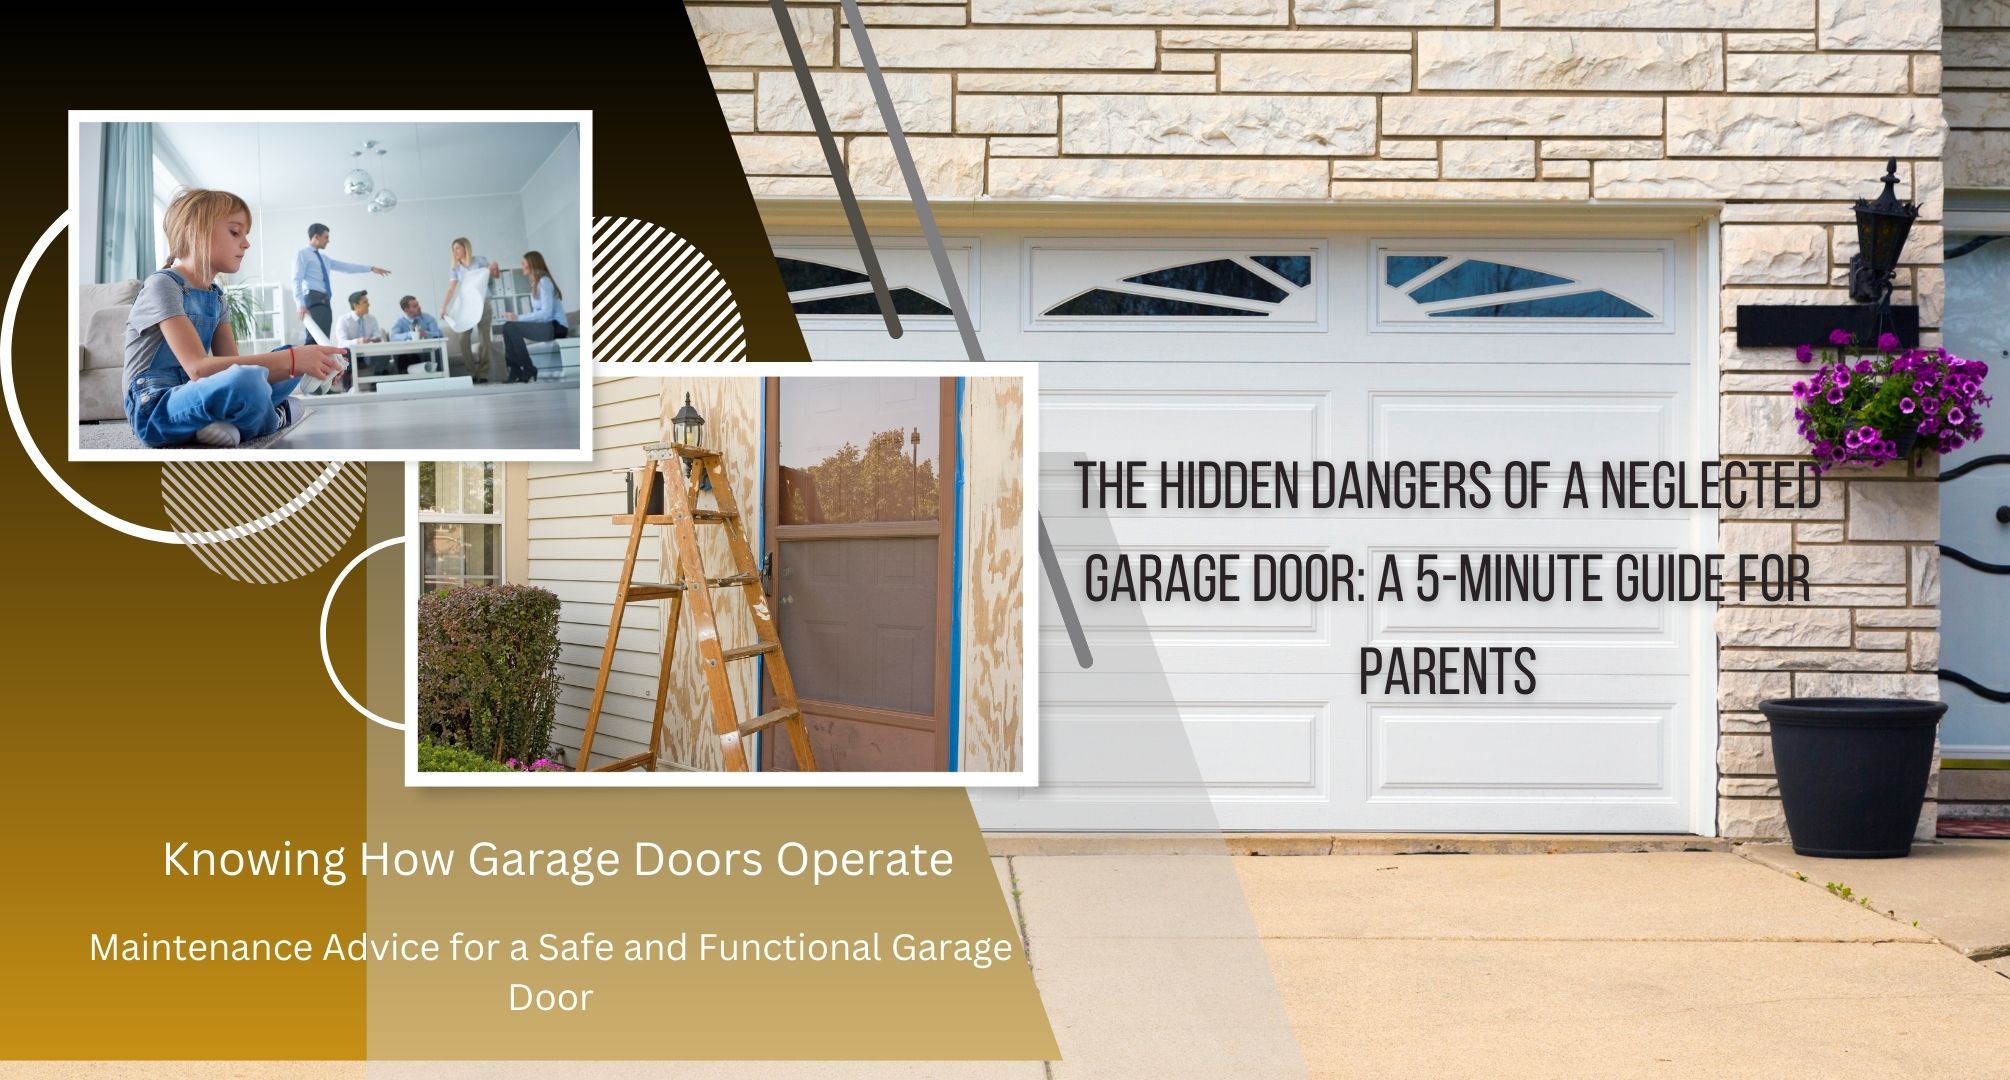 The Hidden Dangers of a Neglected Garage Door: A 5-Minute Guide for Parents